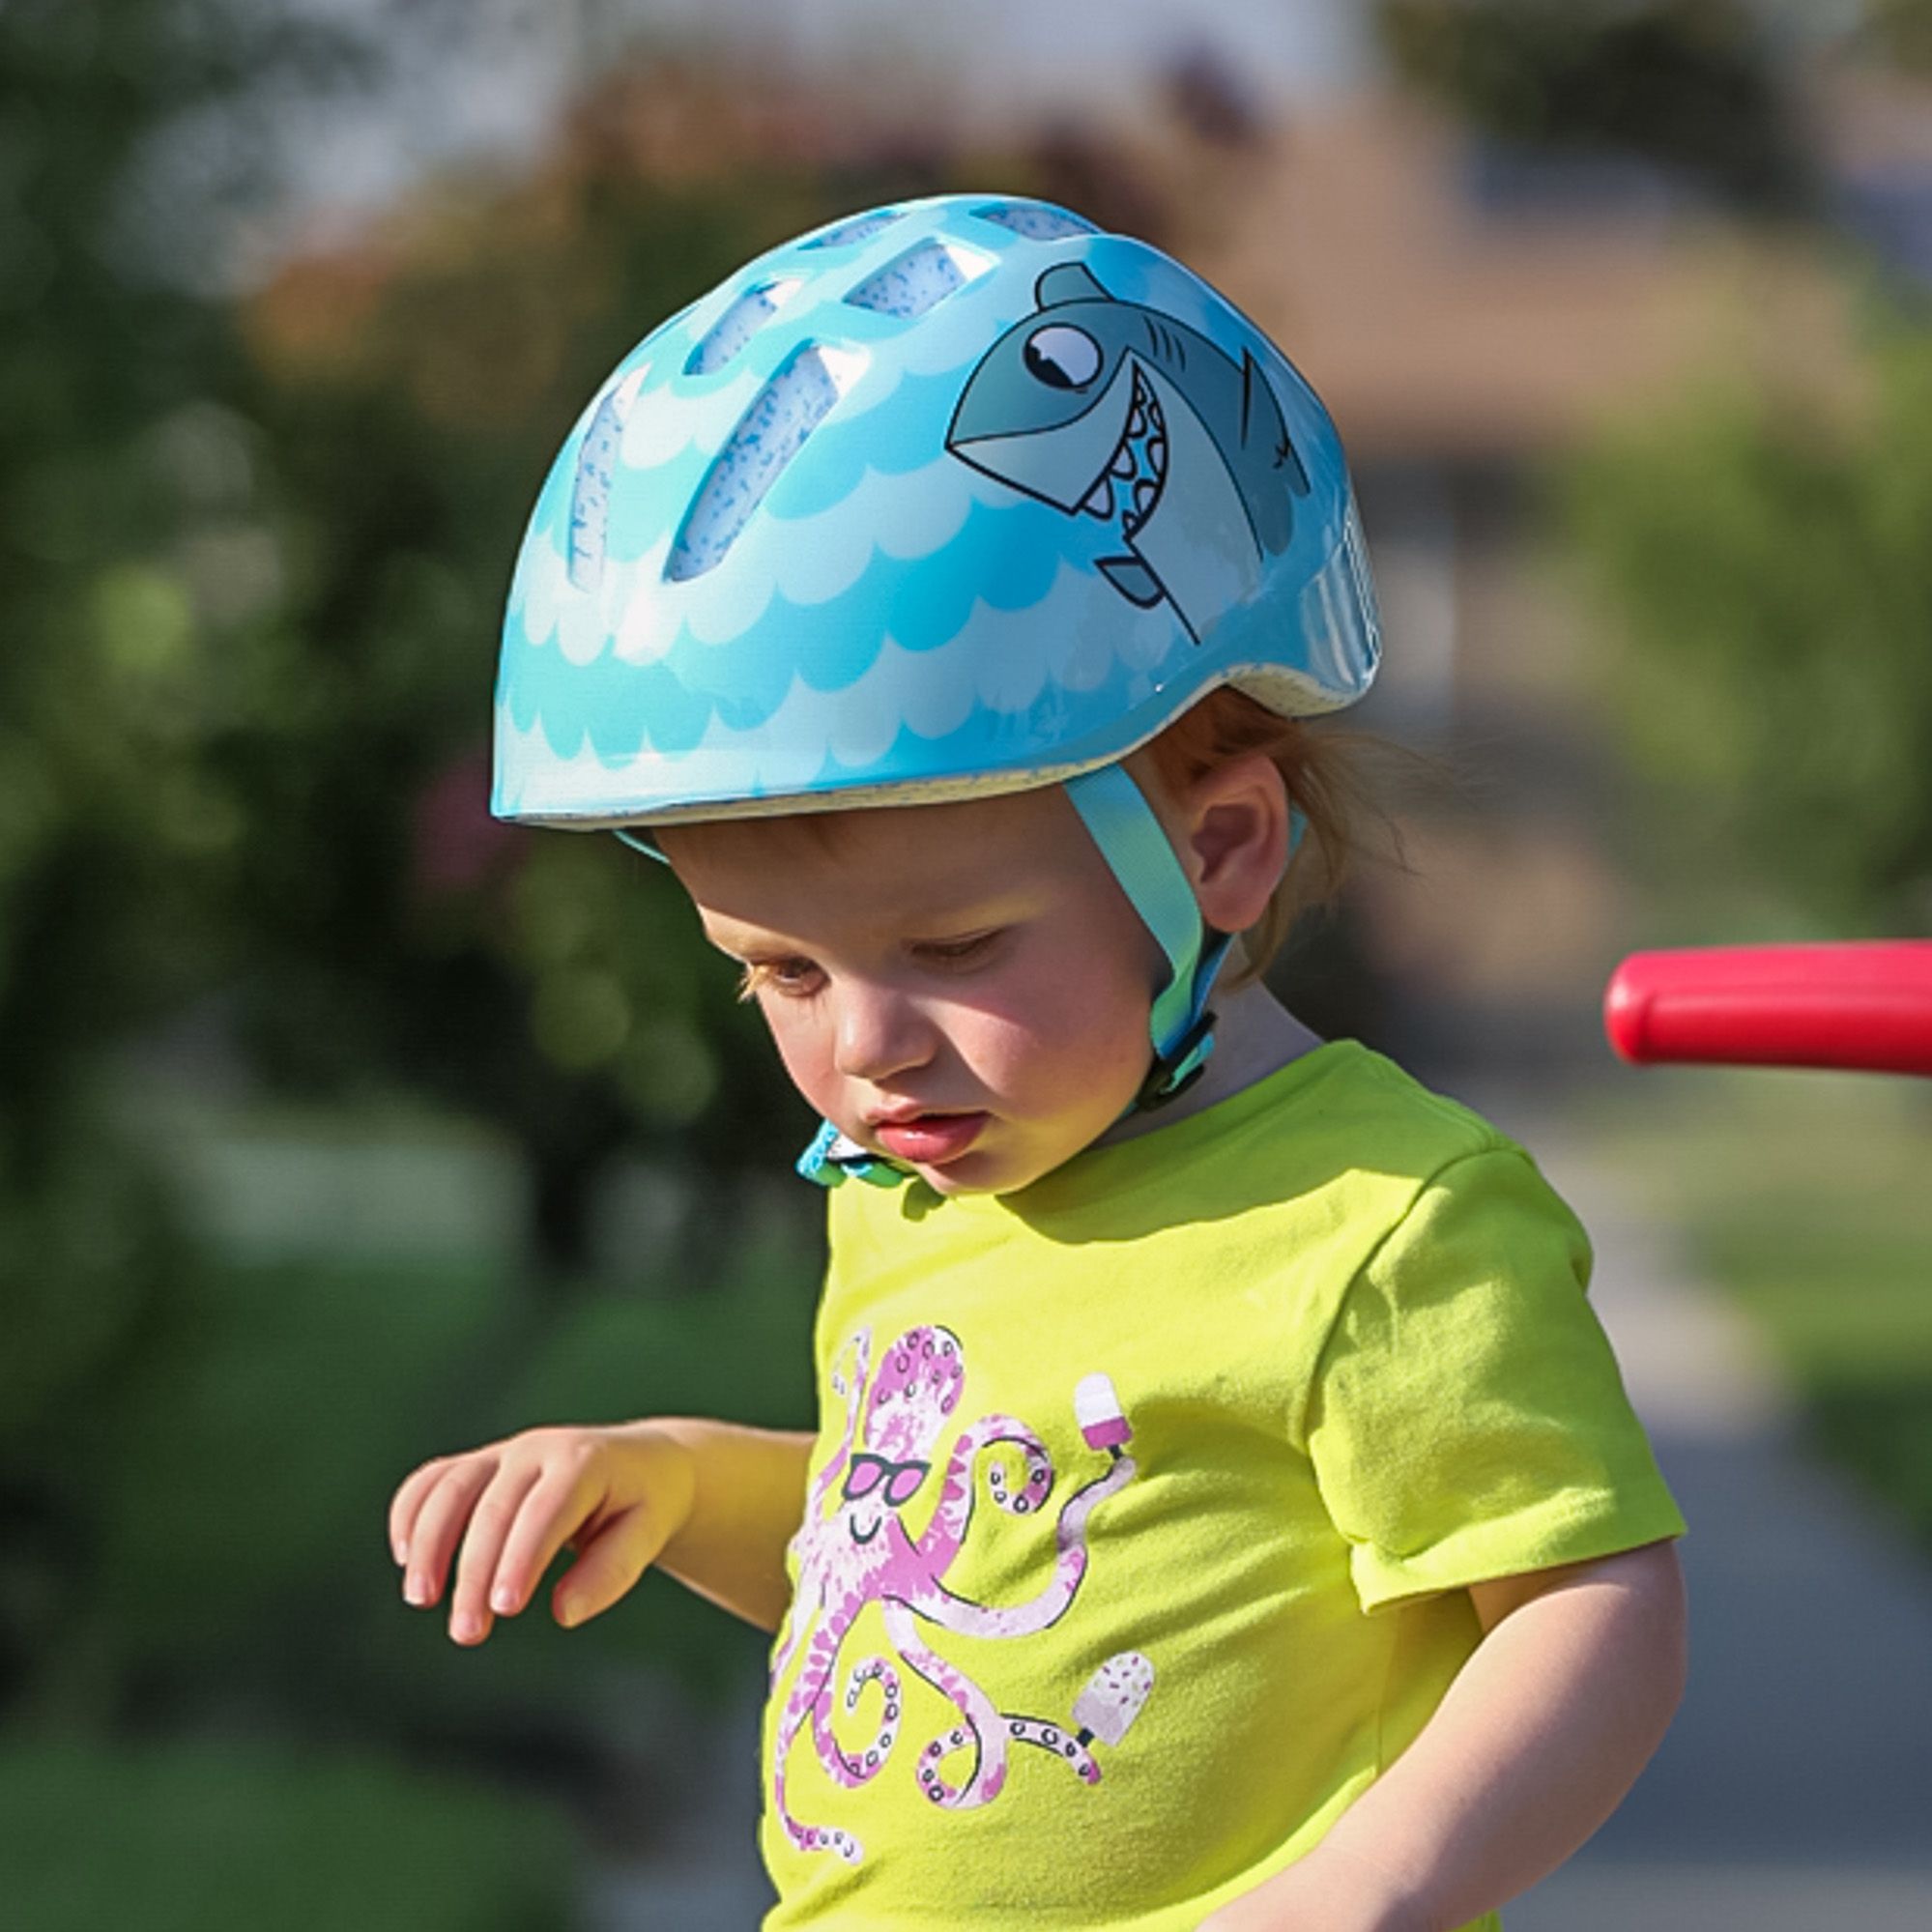 Raskullz Toddler Lil Big Shark Bike Helmet